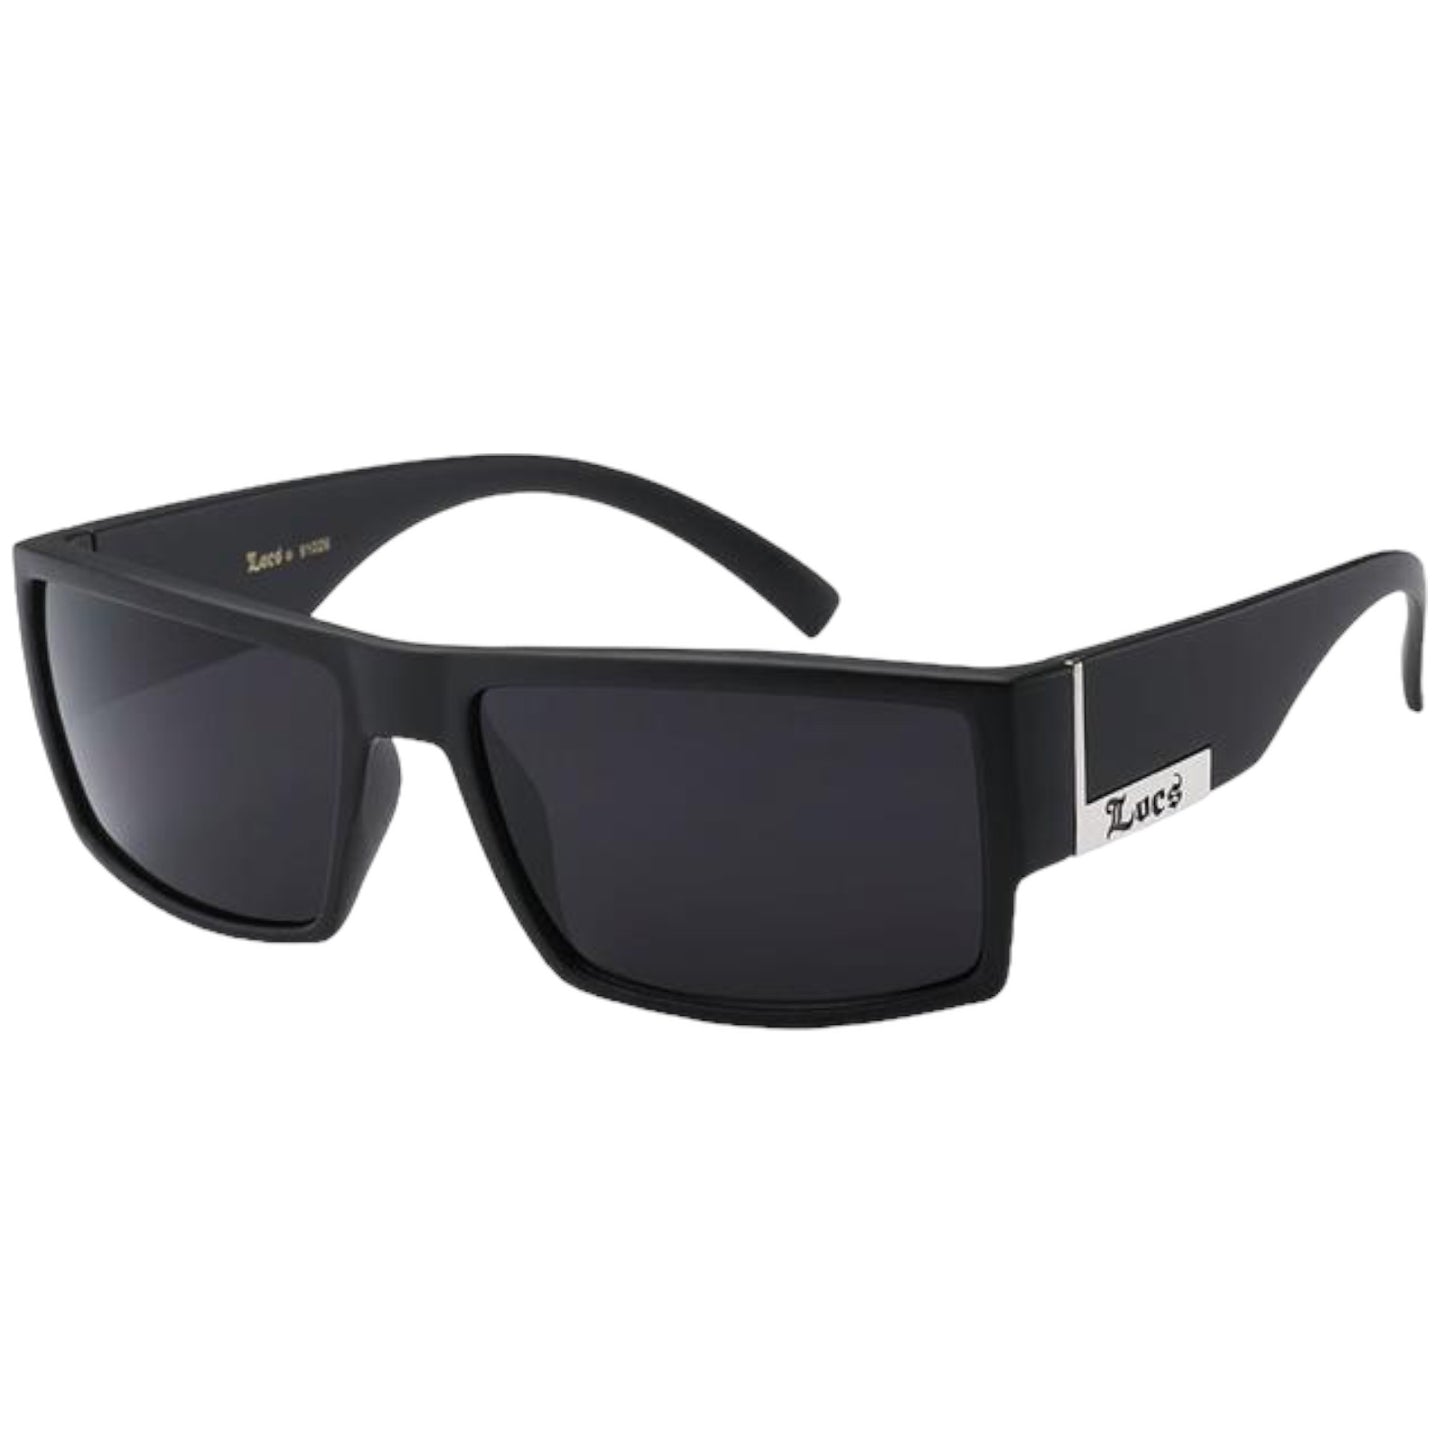 Designer Small Locs Black Flat Top Wrap Around Sunglasses for Men Matt Black Smoke Lens Locs Shades image_07887e26-1595-499f-9a5c-88742a2de86f